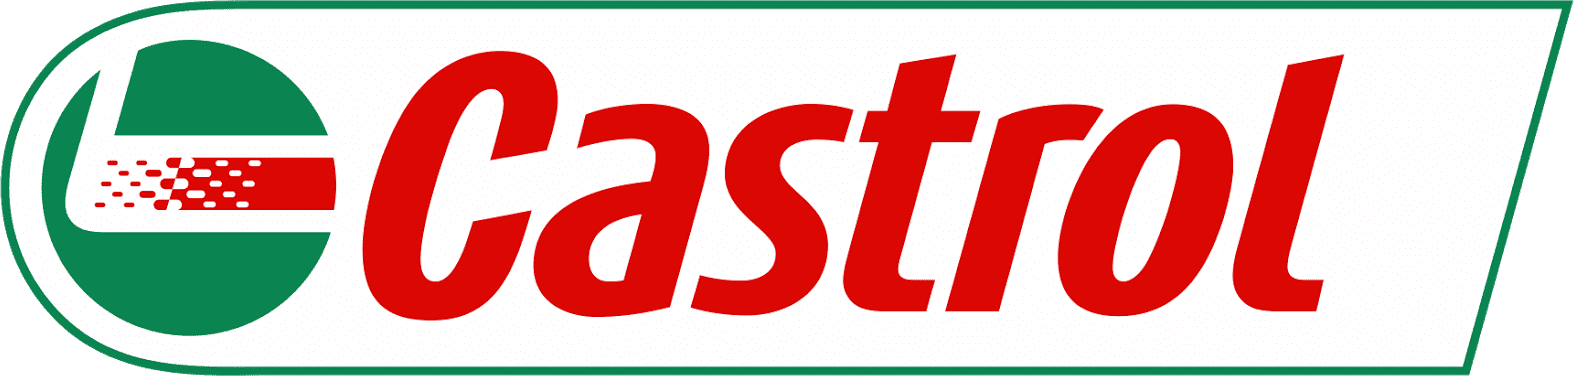 Логотип Castrol